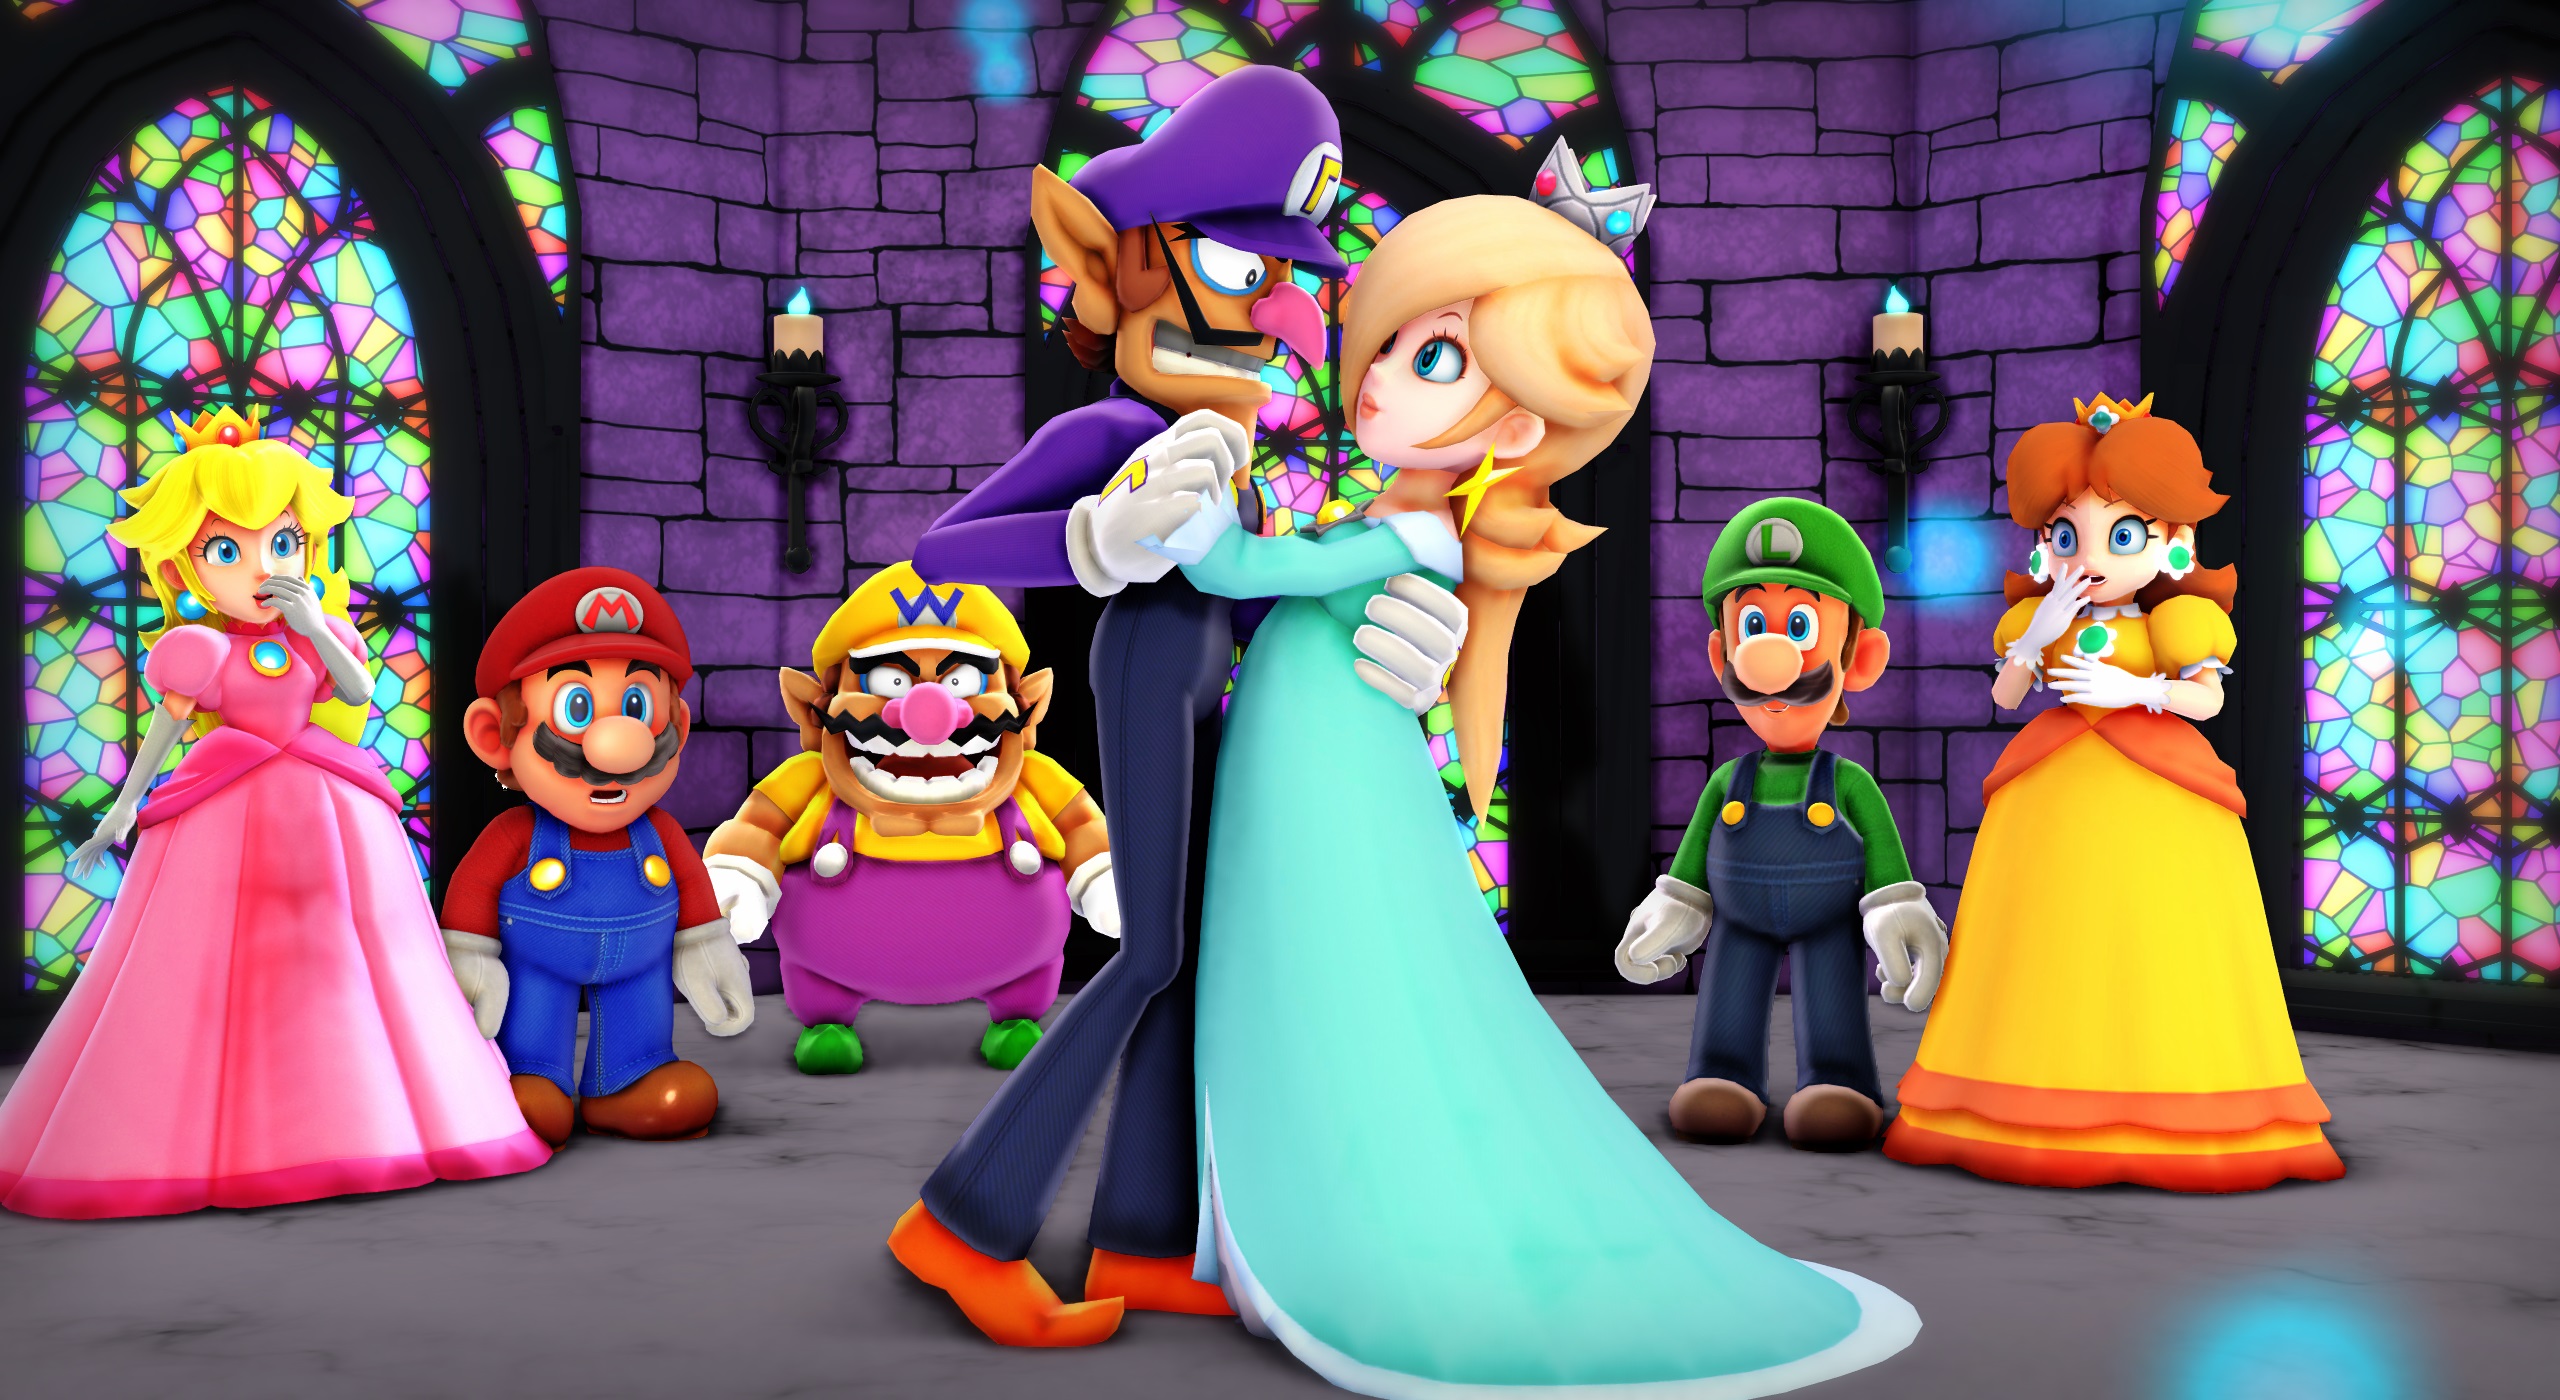 Who is Luigis girlfriend?